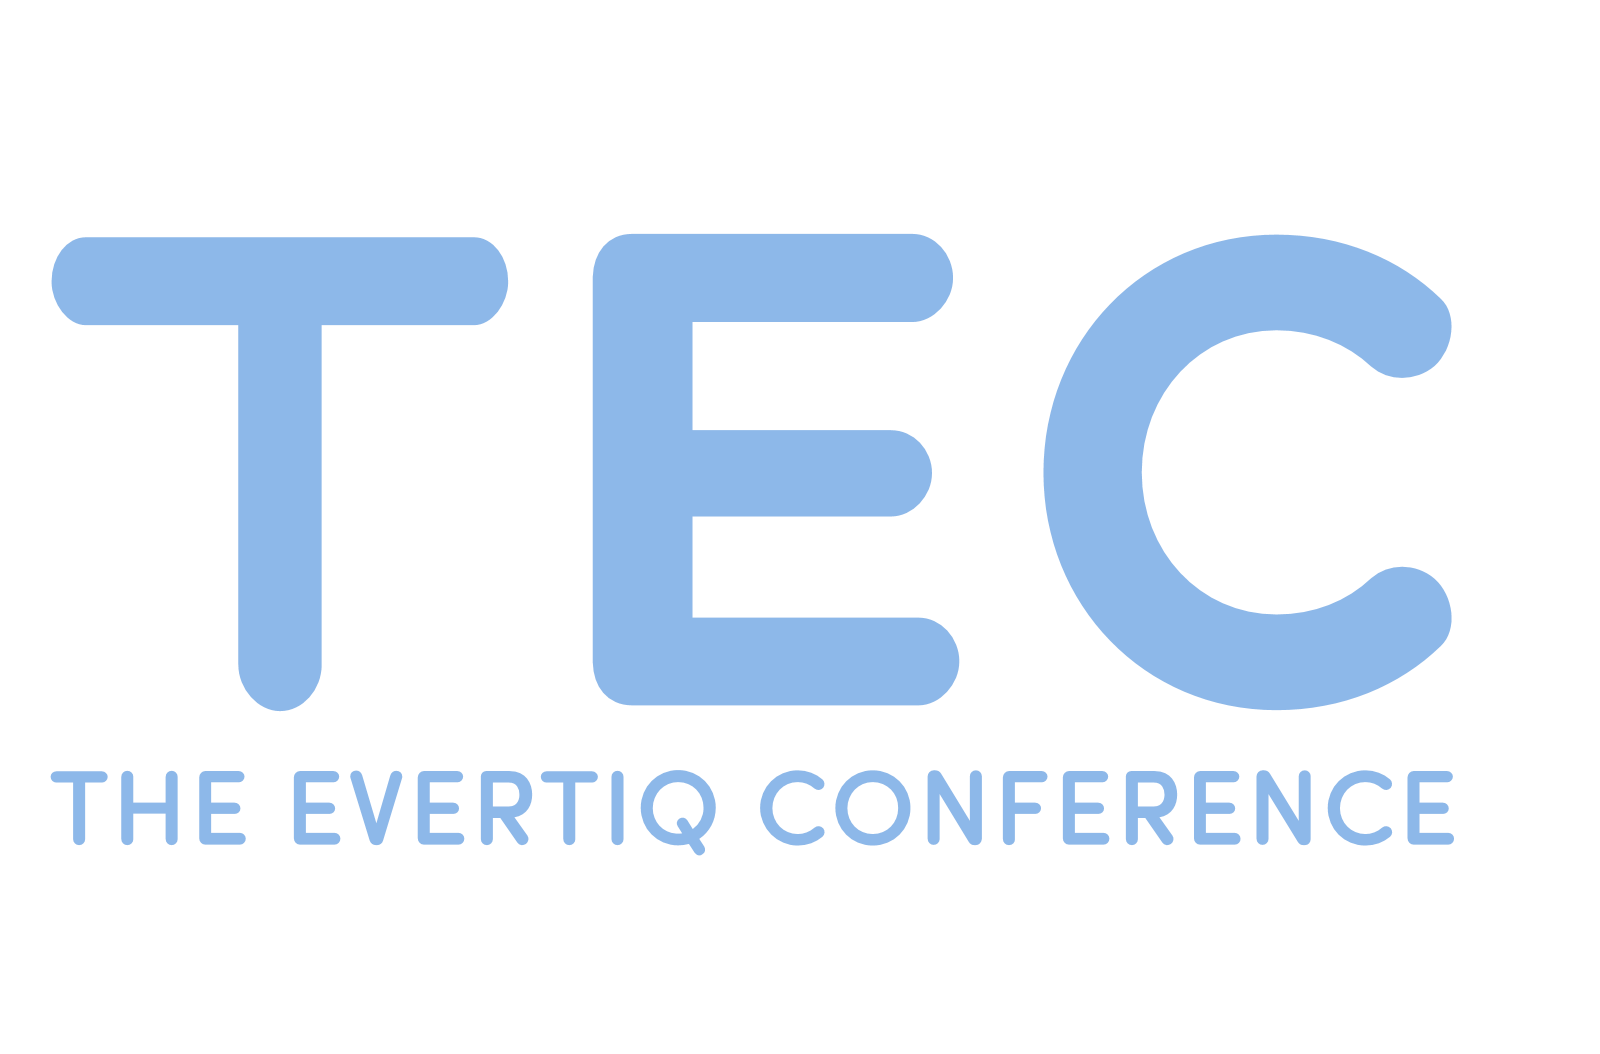 The TEC logo reads The Evertiq Conference